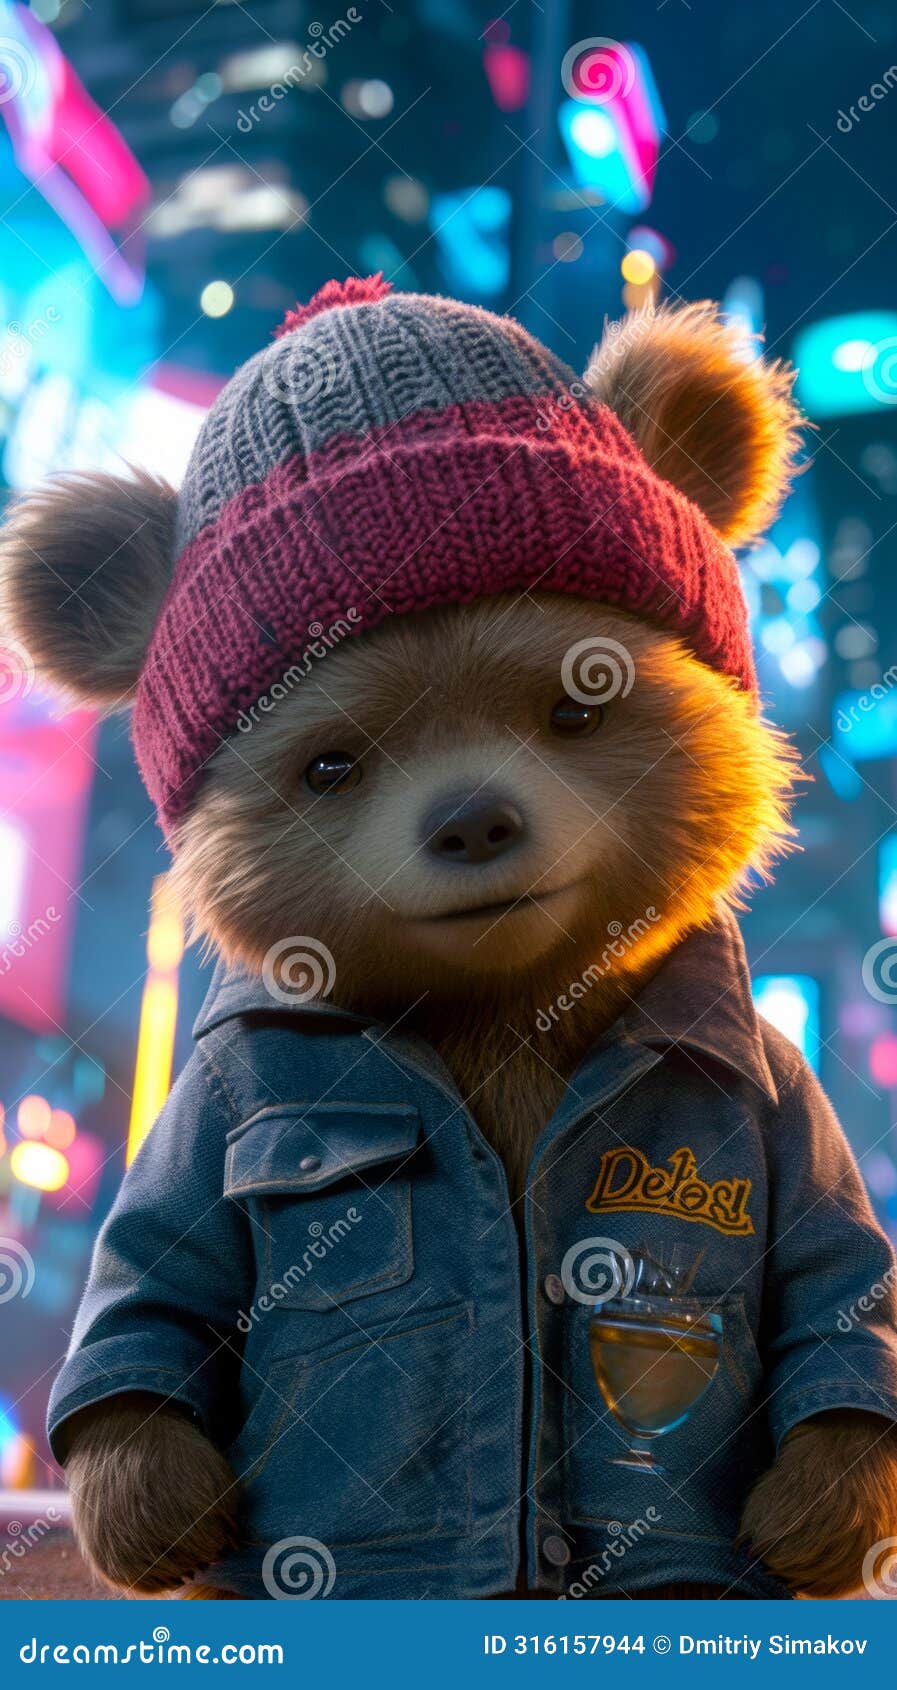 urban-cool bear in a denim jacket, sporting a beanie with graffiti motifs